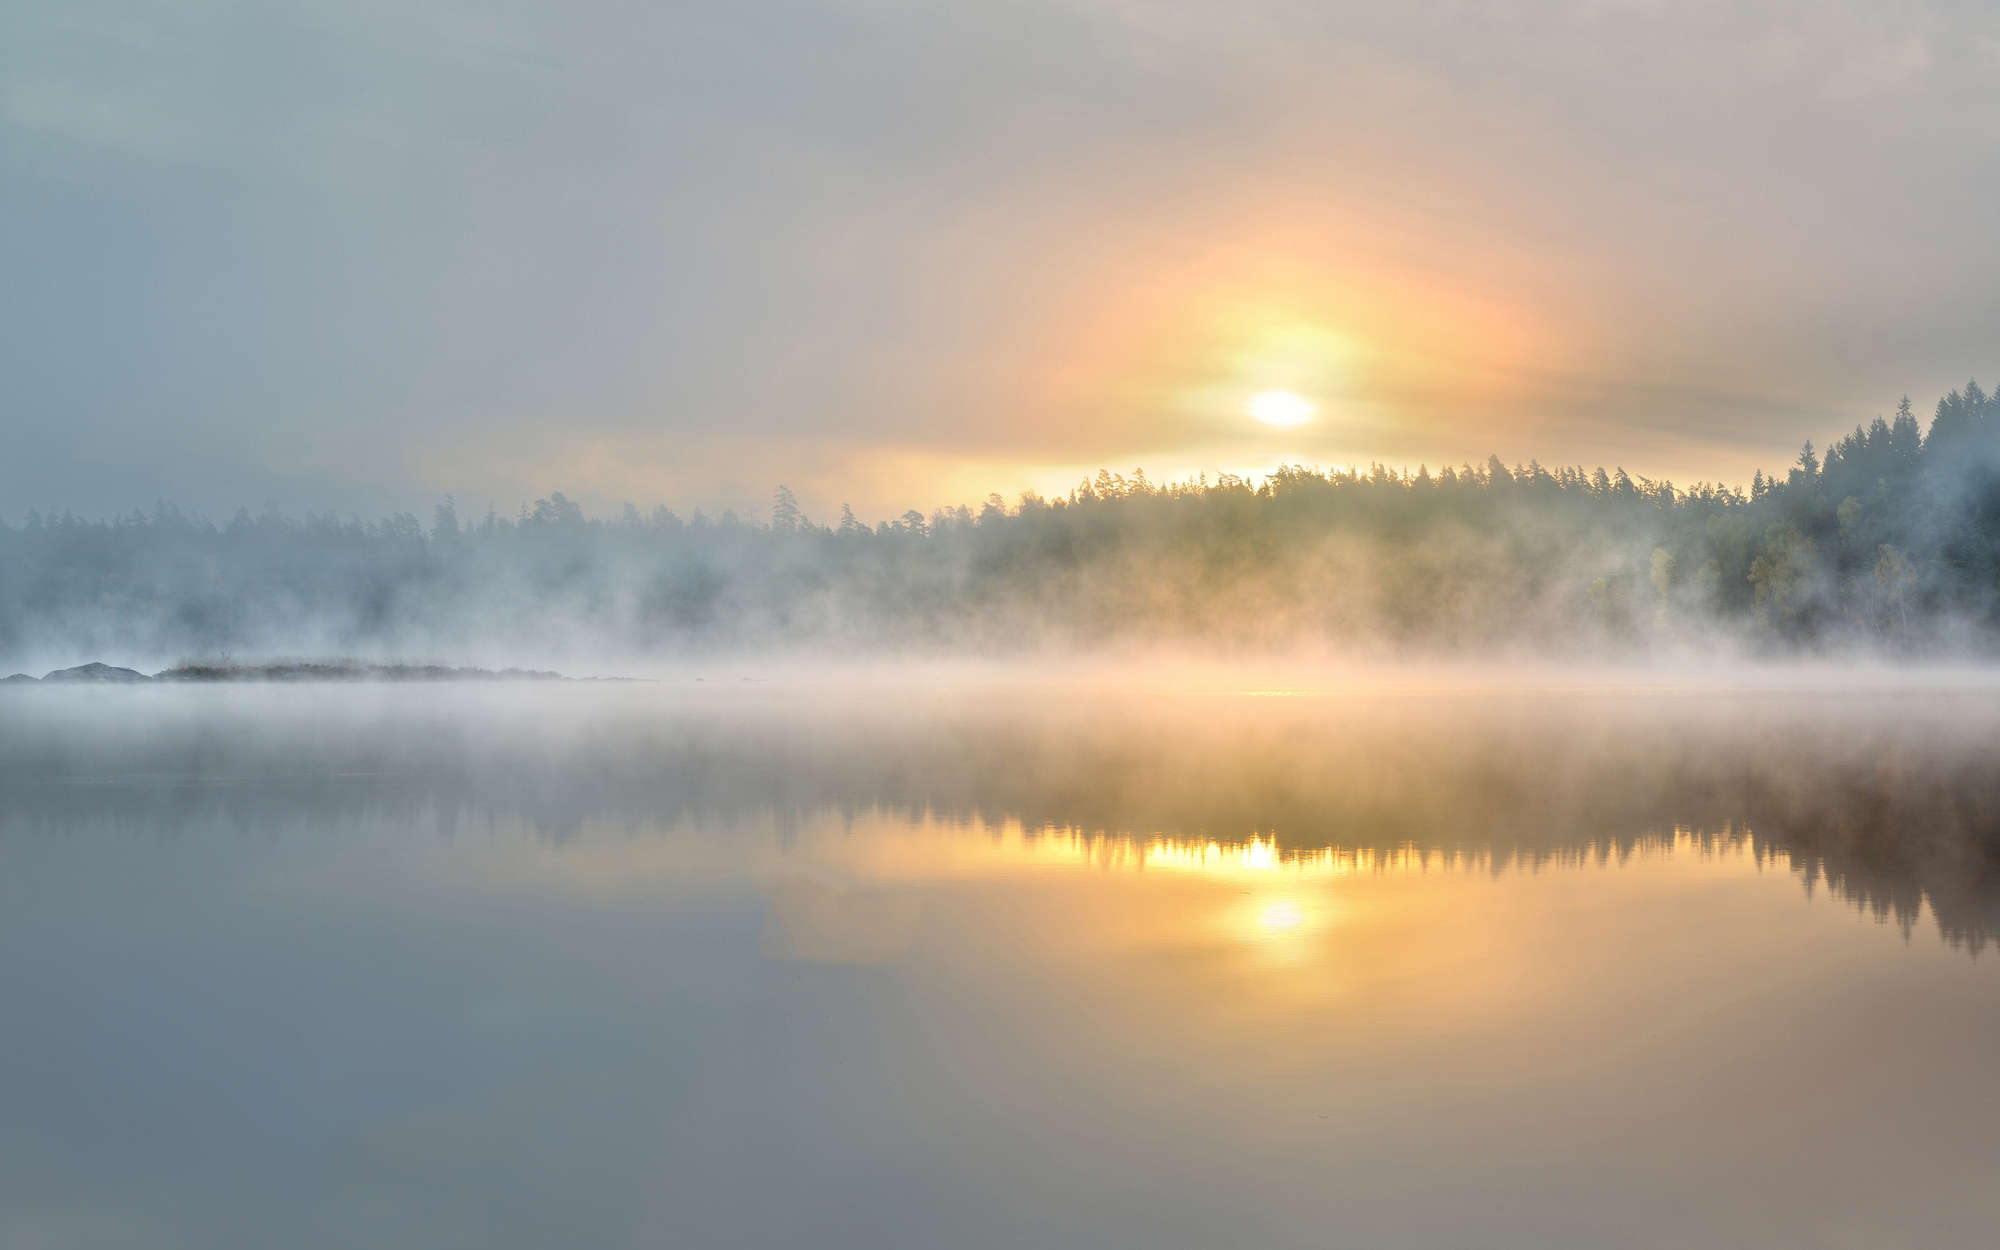             Foggy Morning at the Lake Wallpaper - Textured non-woven
        